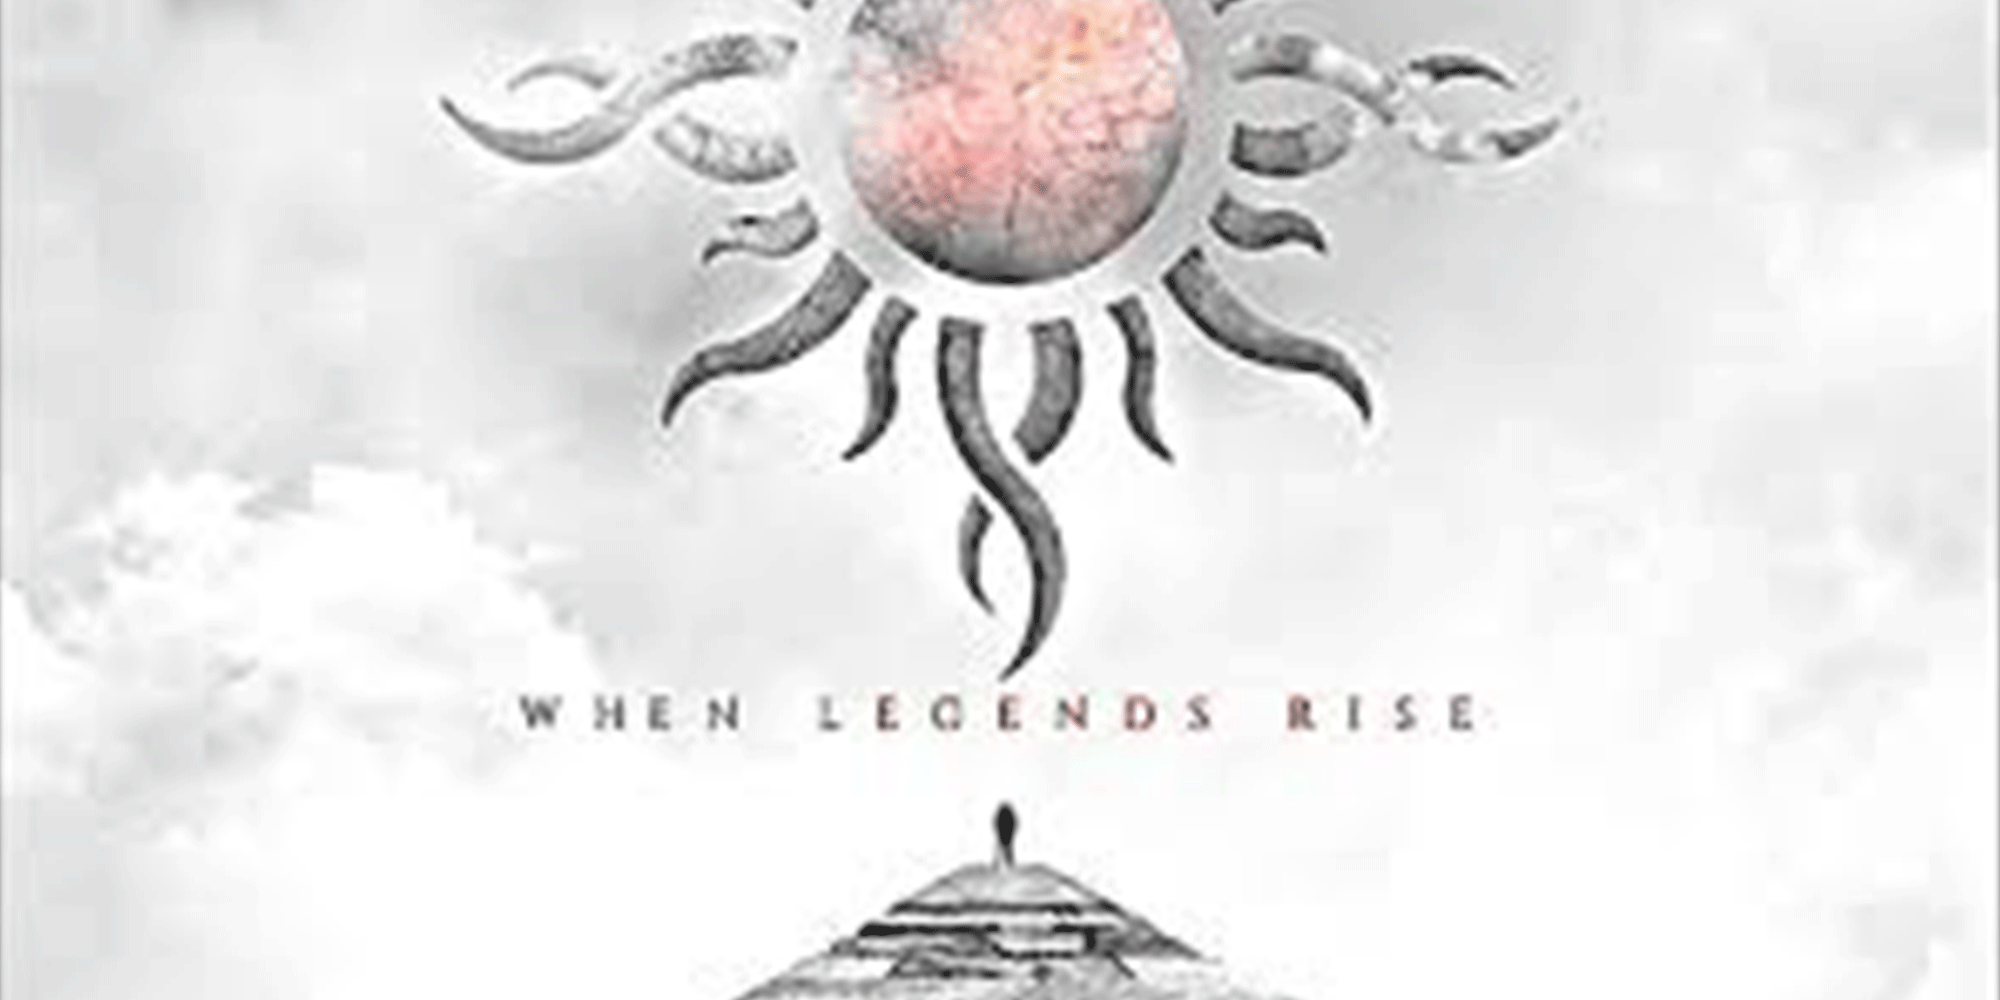 https://www.pledgemusic.com/projects/godsmack-when-legends-rise